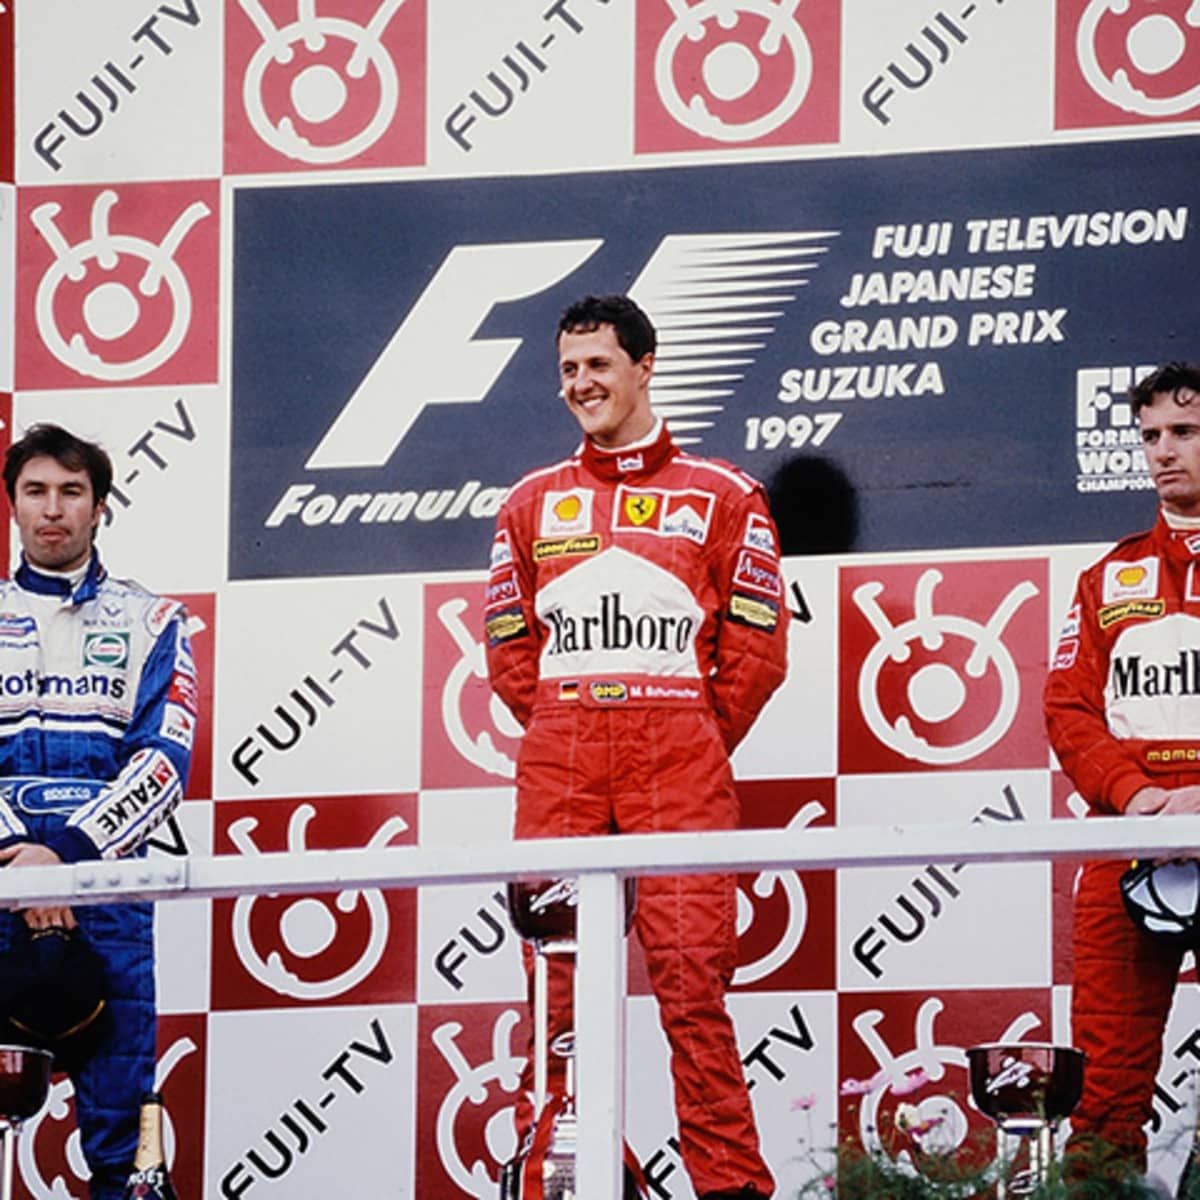 1997 Japanese Grand Prix Podium